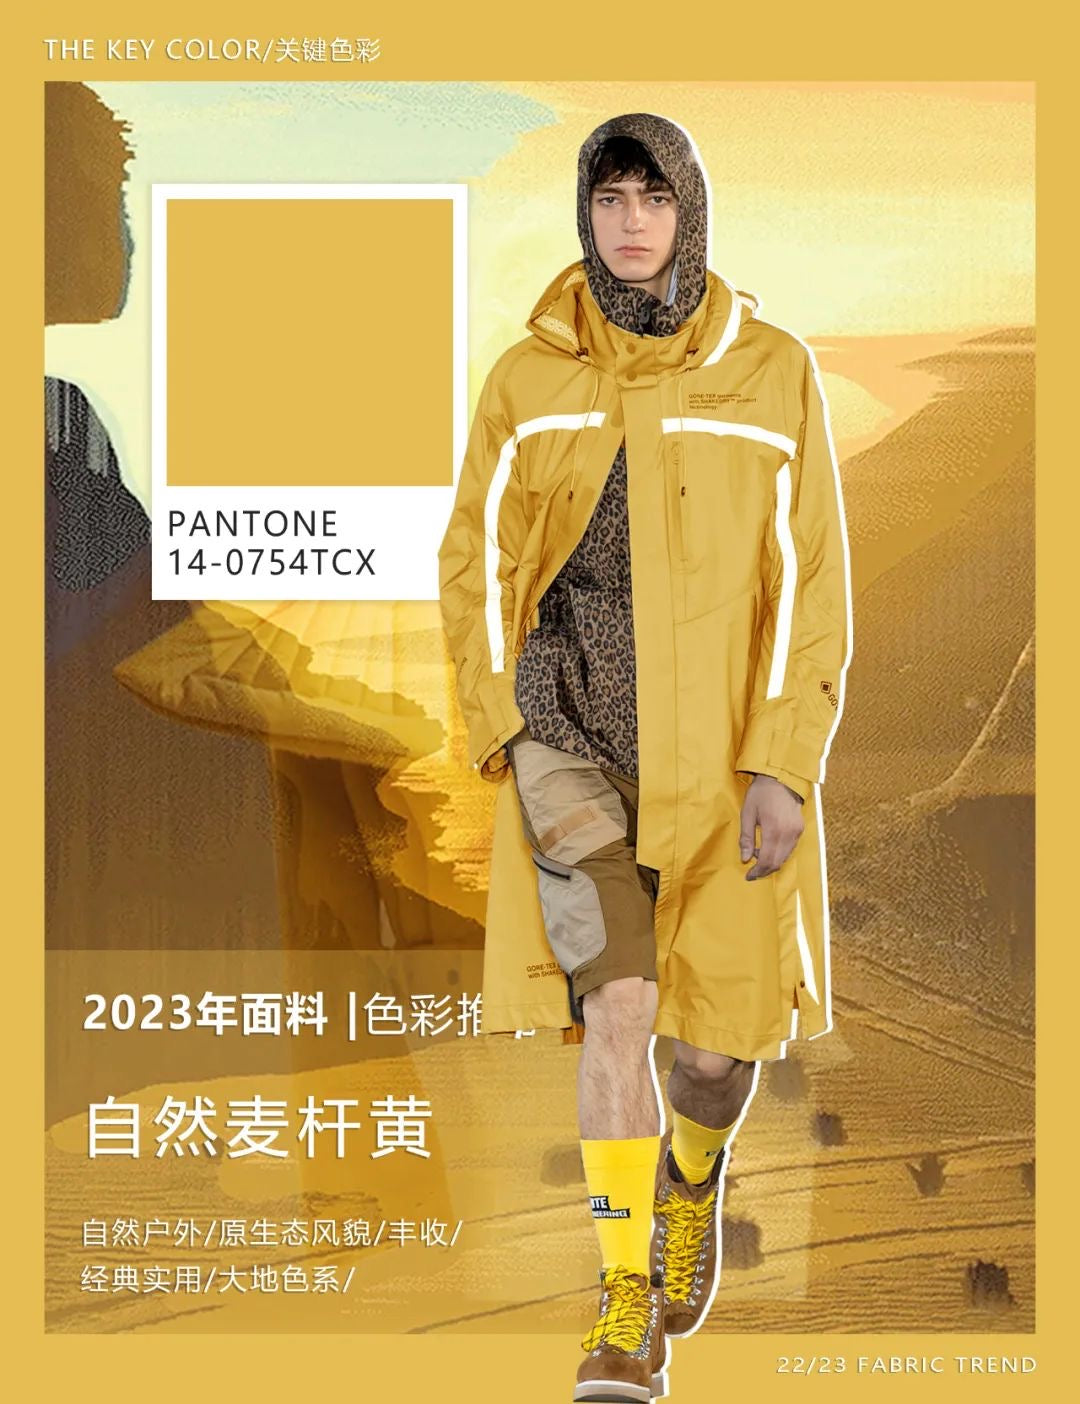 Waterproof Outdoor Clothing - Natasha Fabric